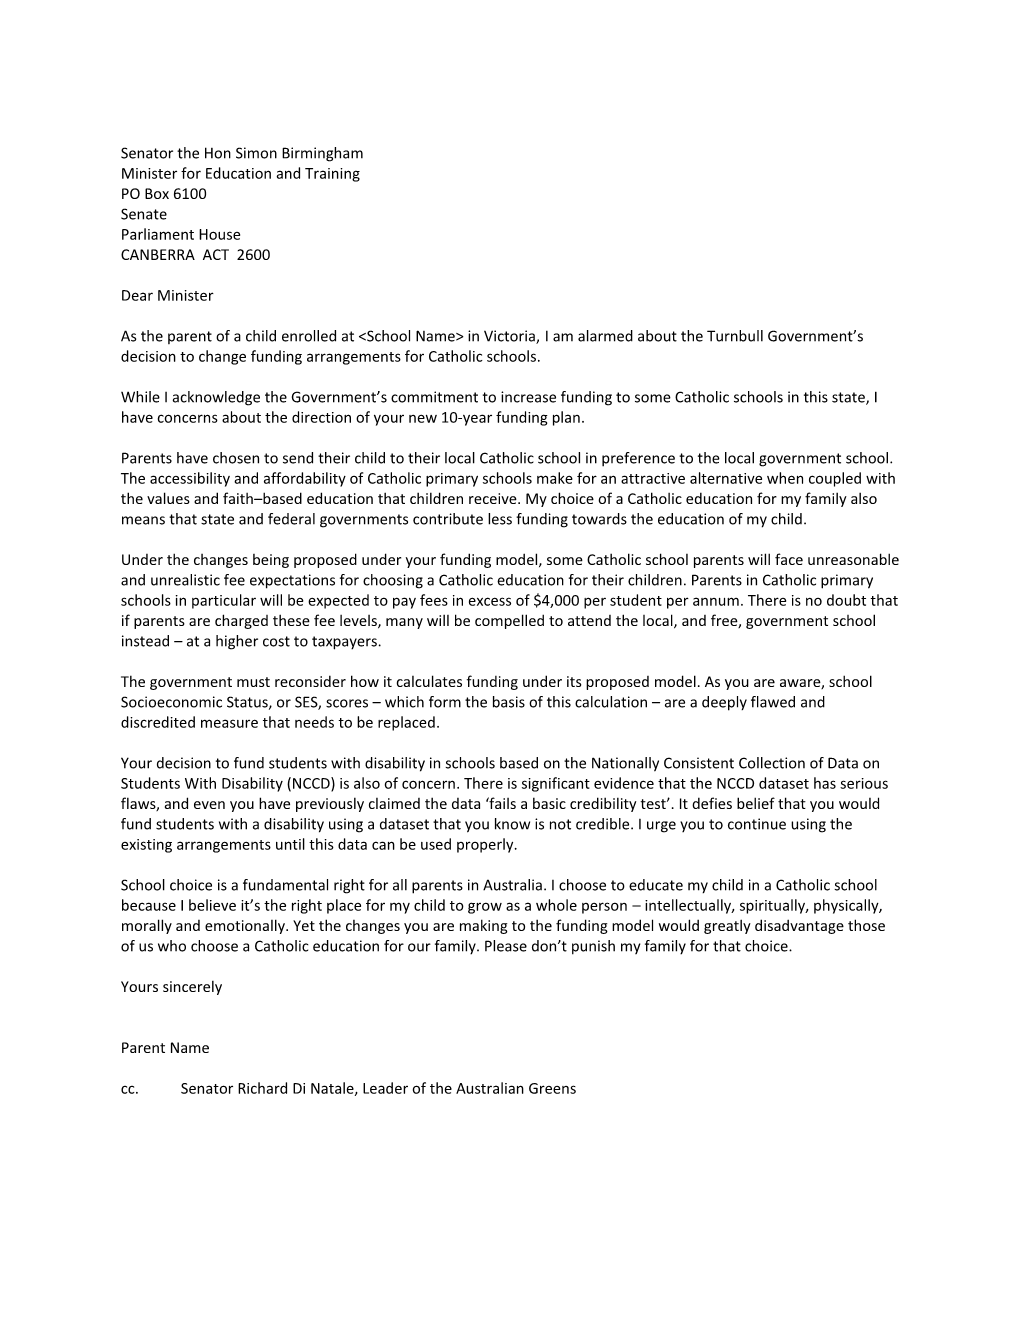 Parent Letter to Minister Birmingham